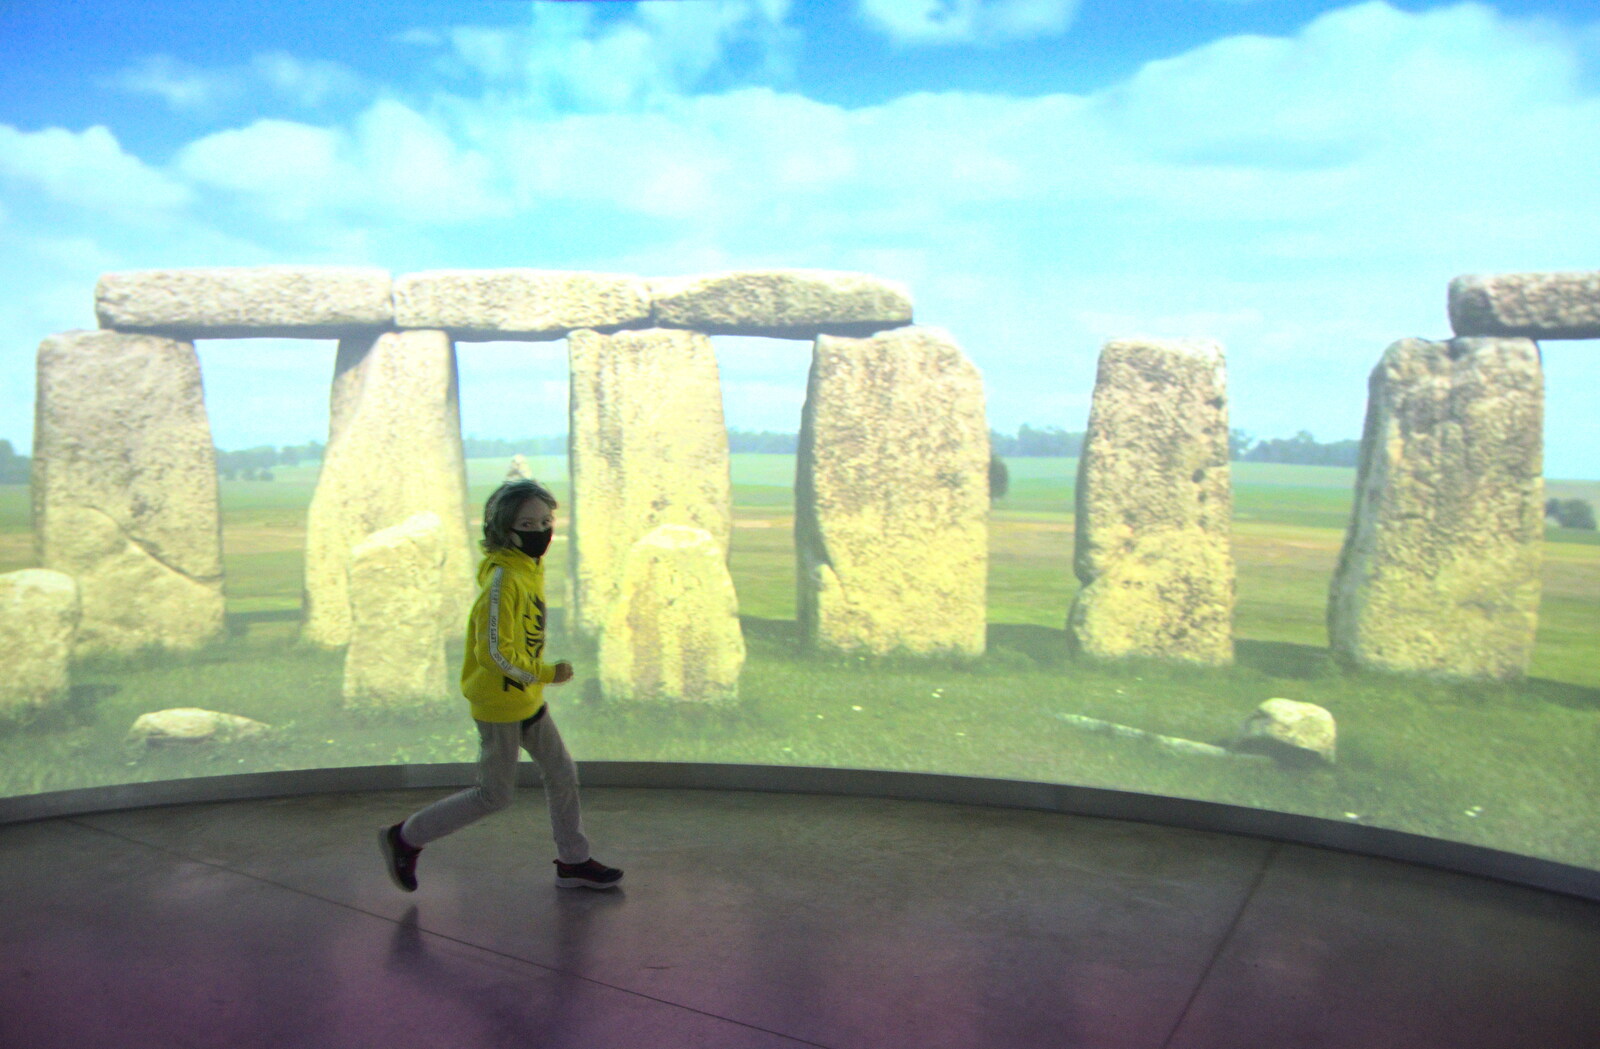 Harry runs around in the VR stonehenge from Stone Circles: Stonehenge and Avebury, Wiltshire - 22nd August 2020